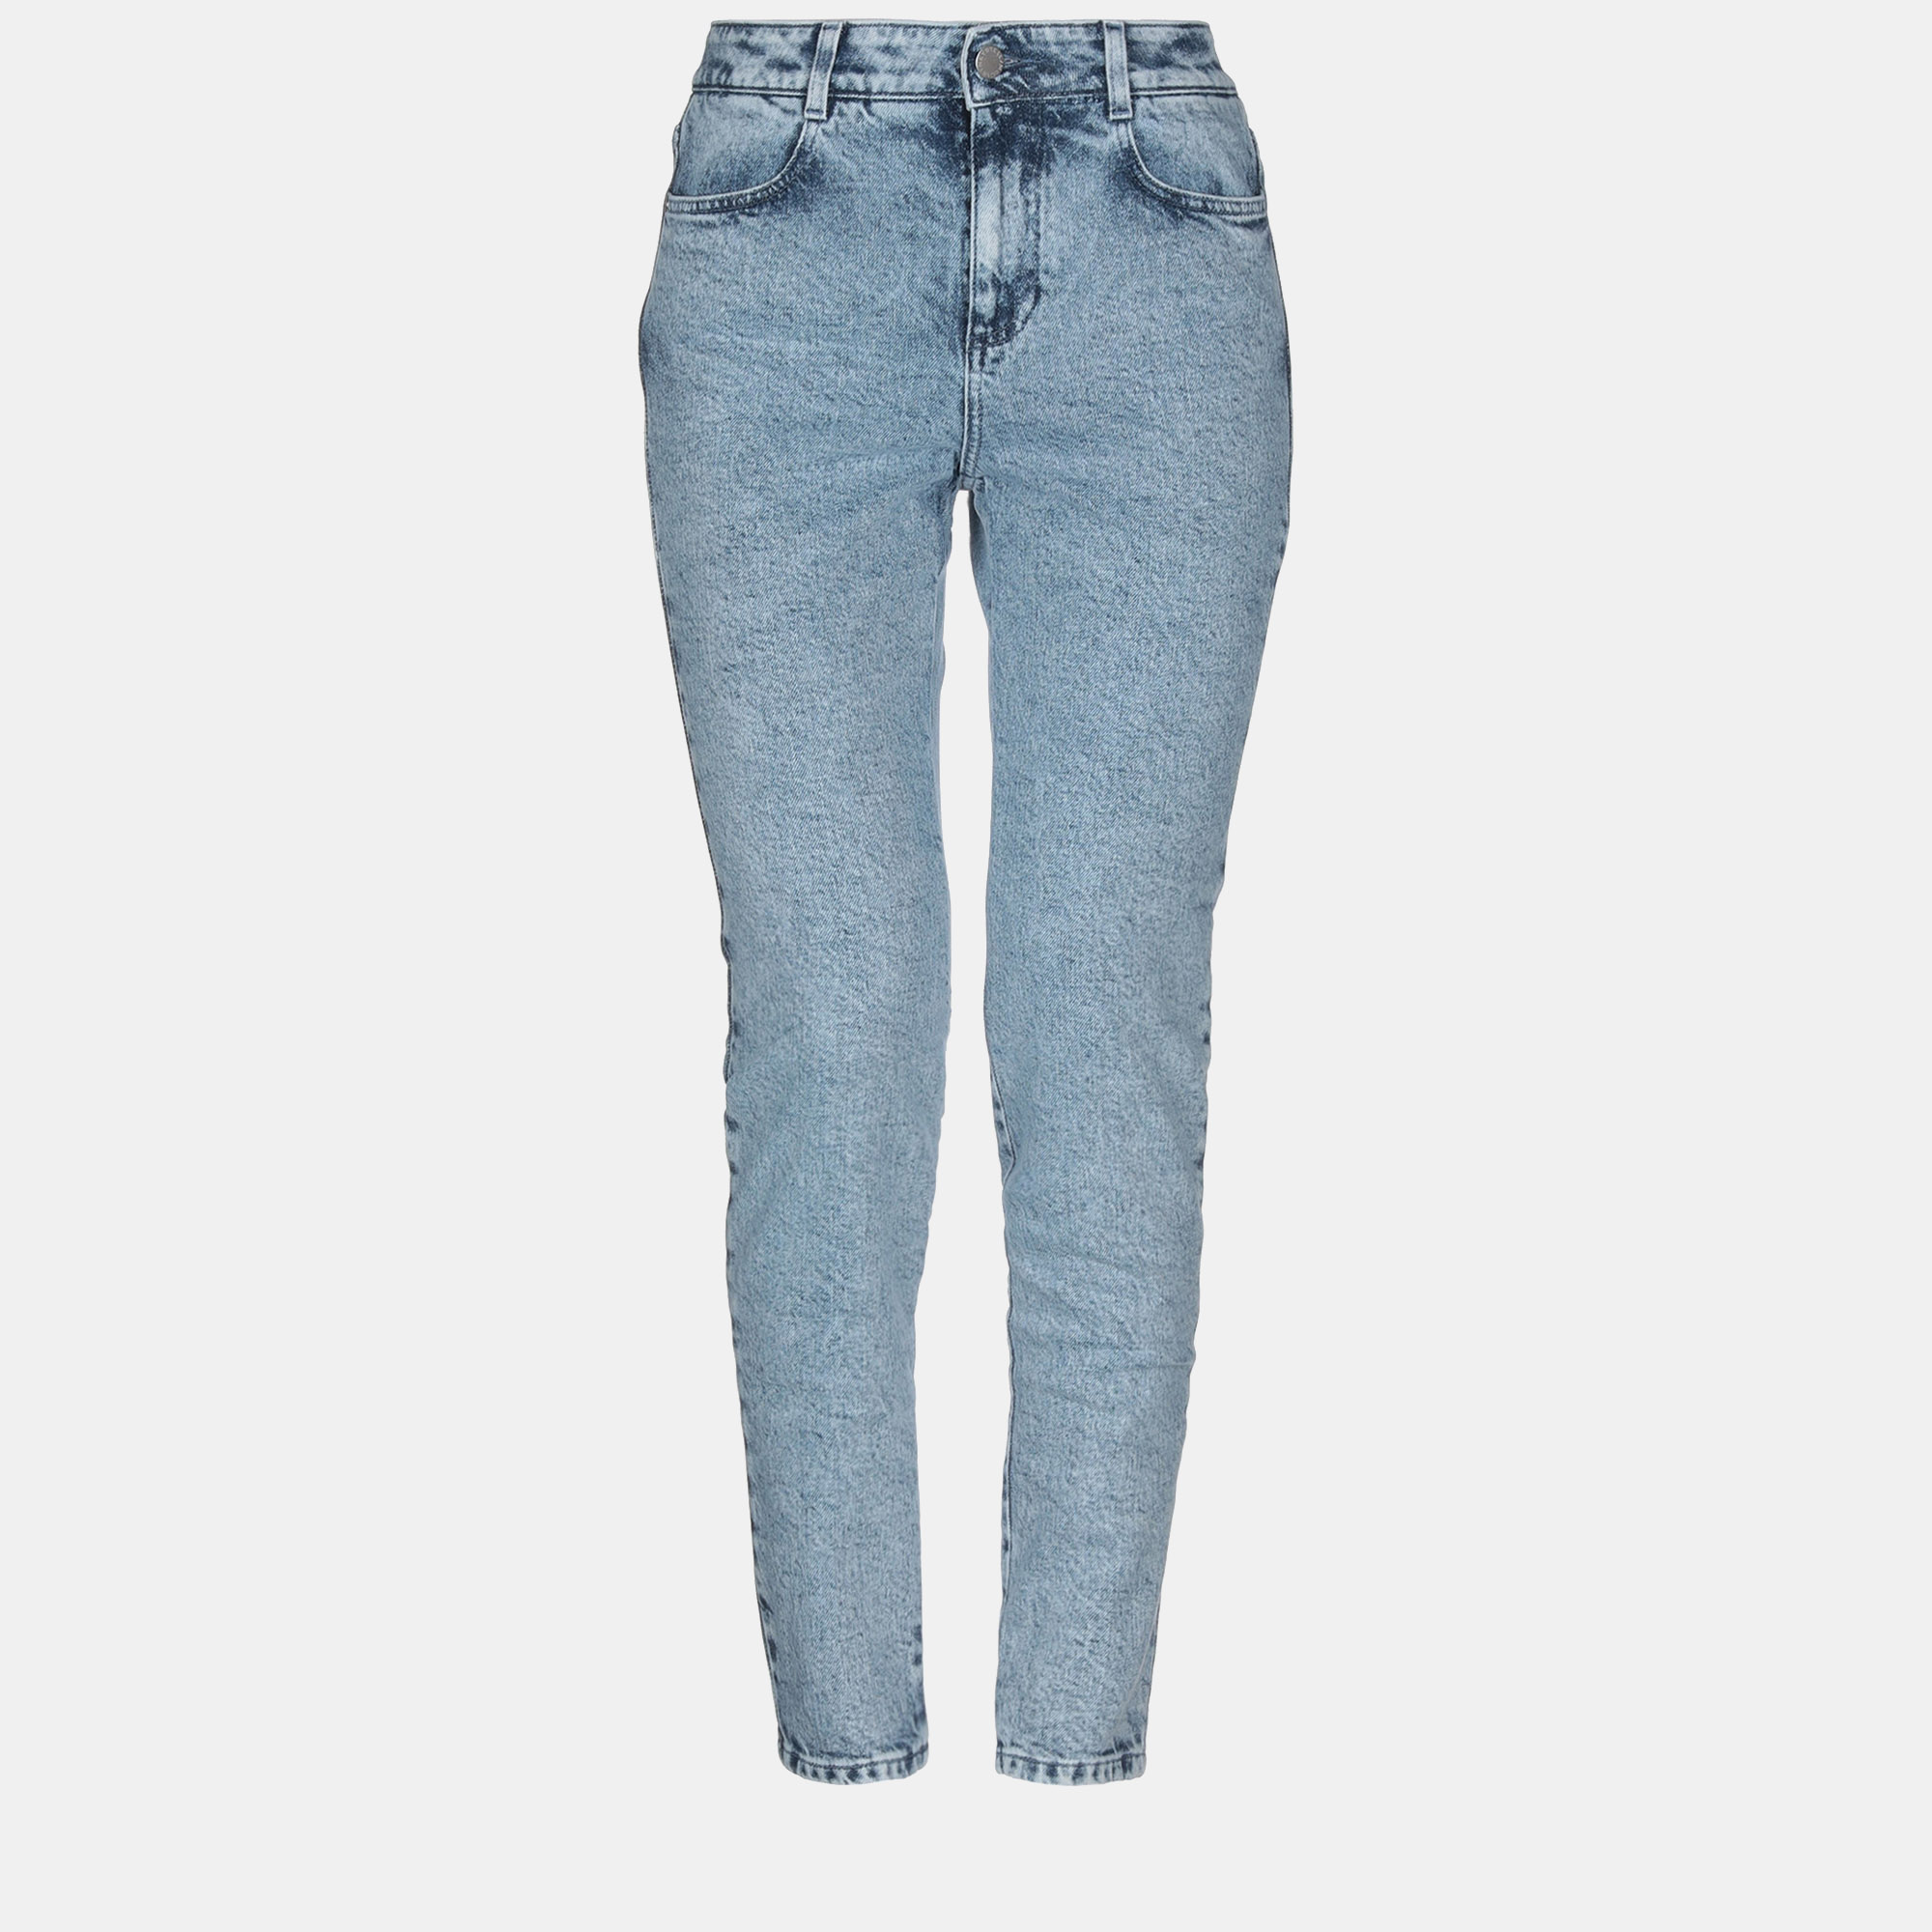 Stella mccartney cotton jeans 29